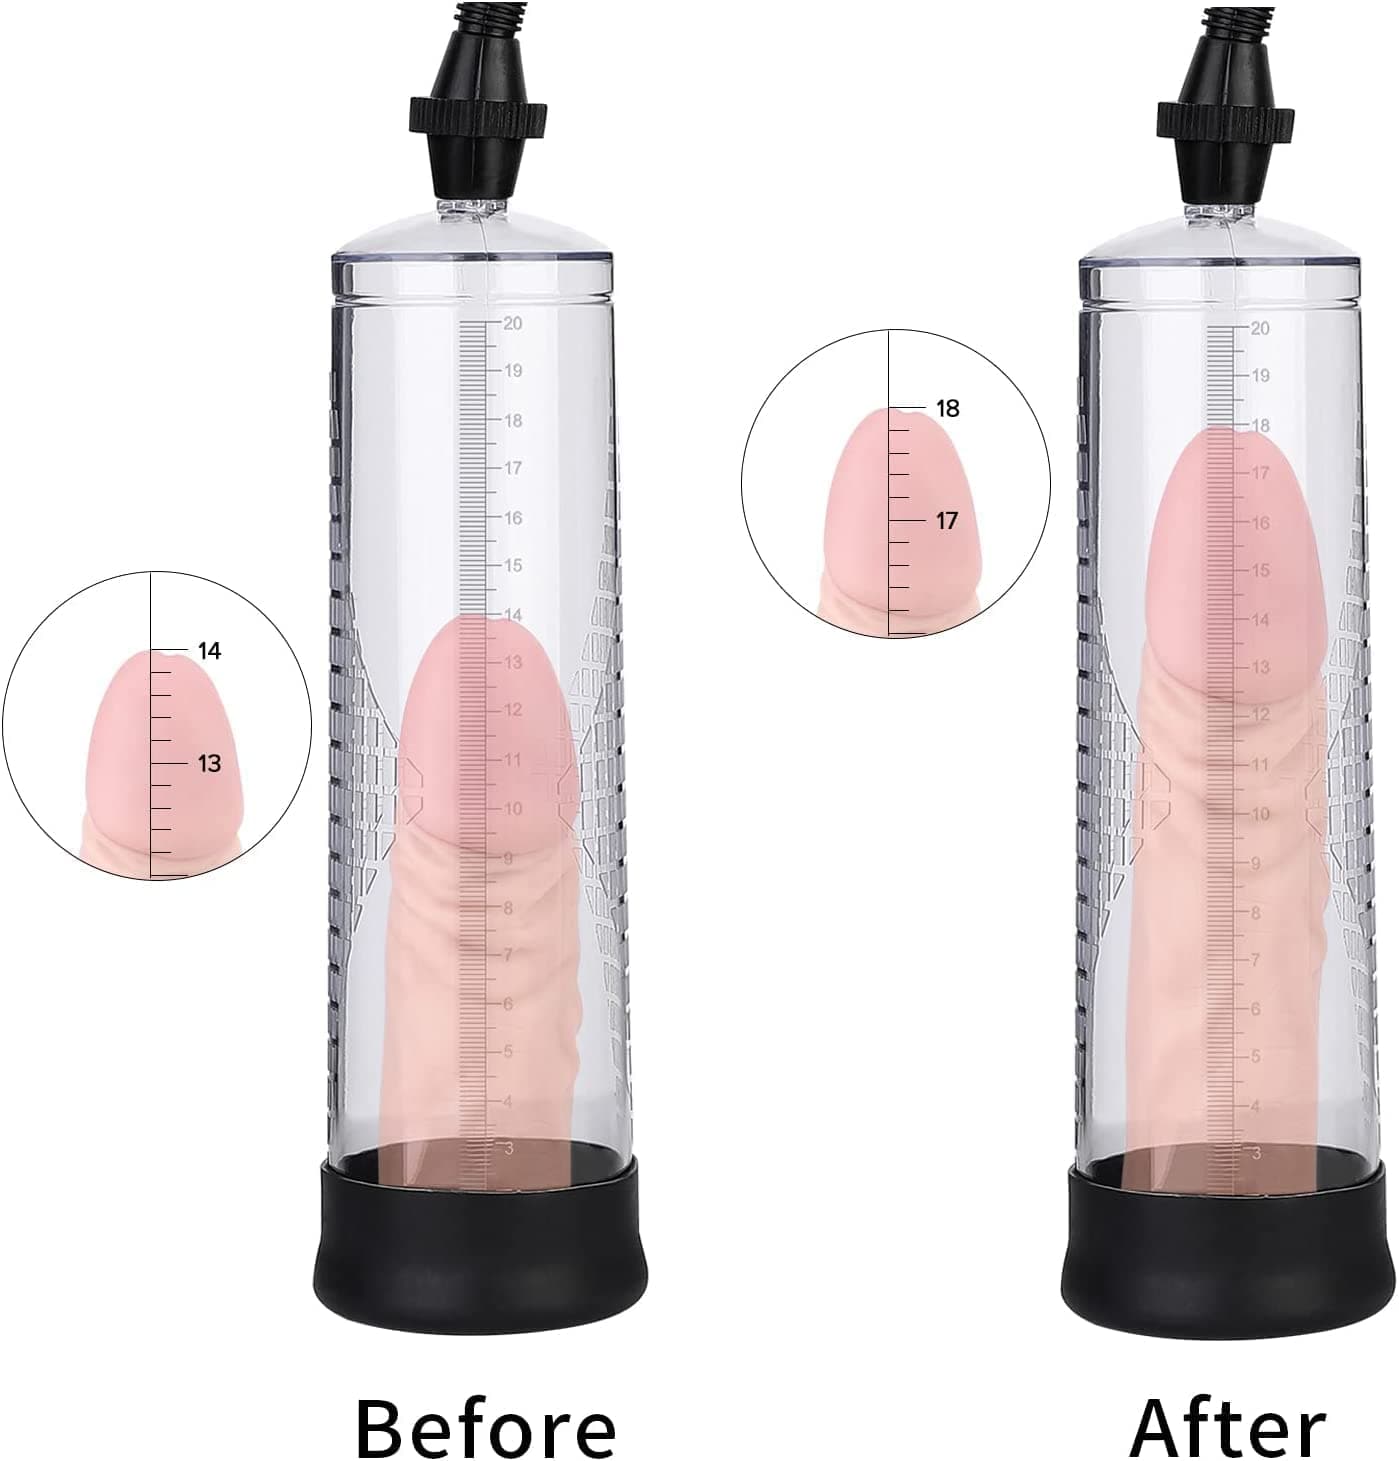 Penis pump set - penis vacuum pump, 3 penis rings, 3 different sizes of silicone sleeves